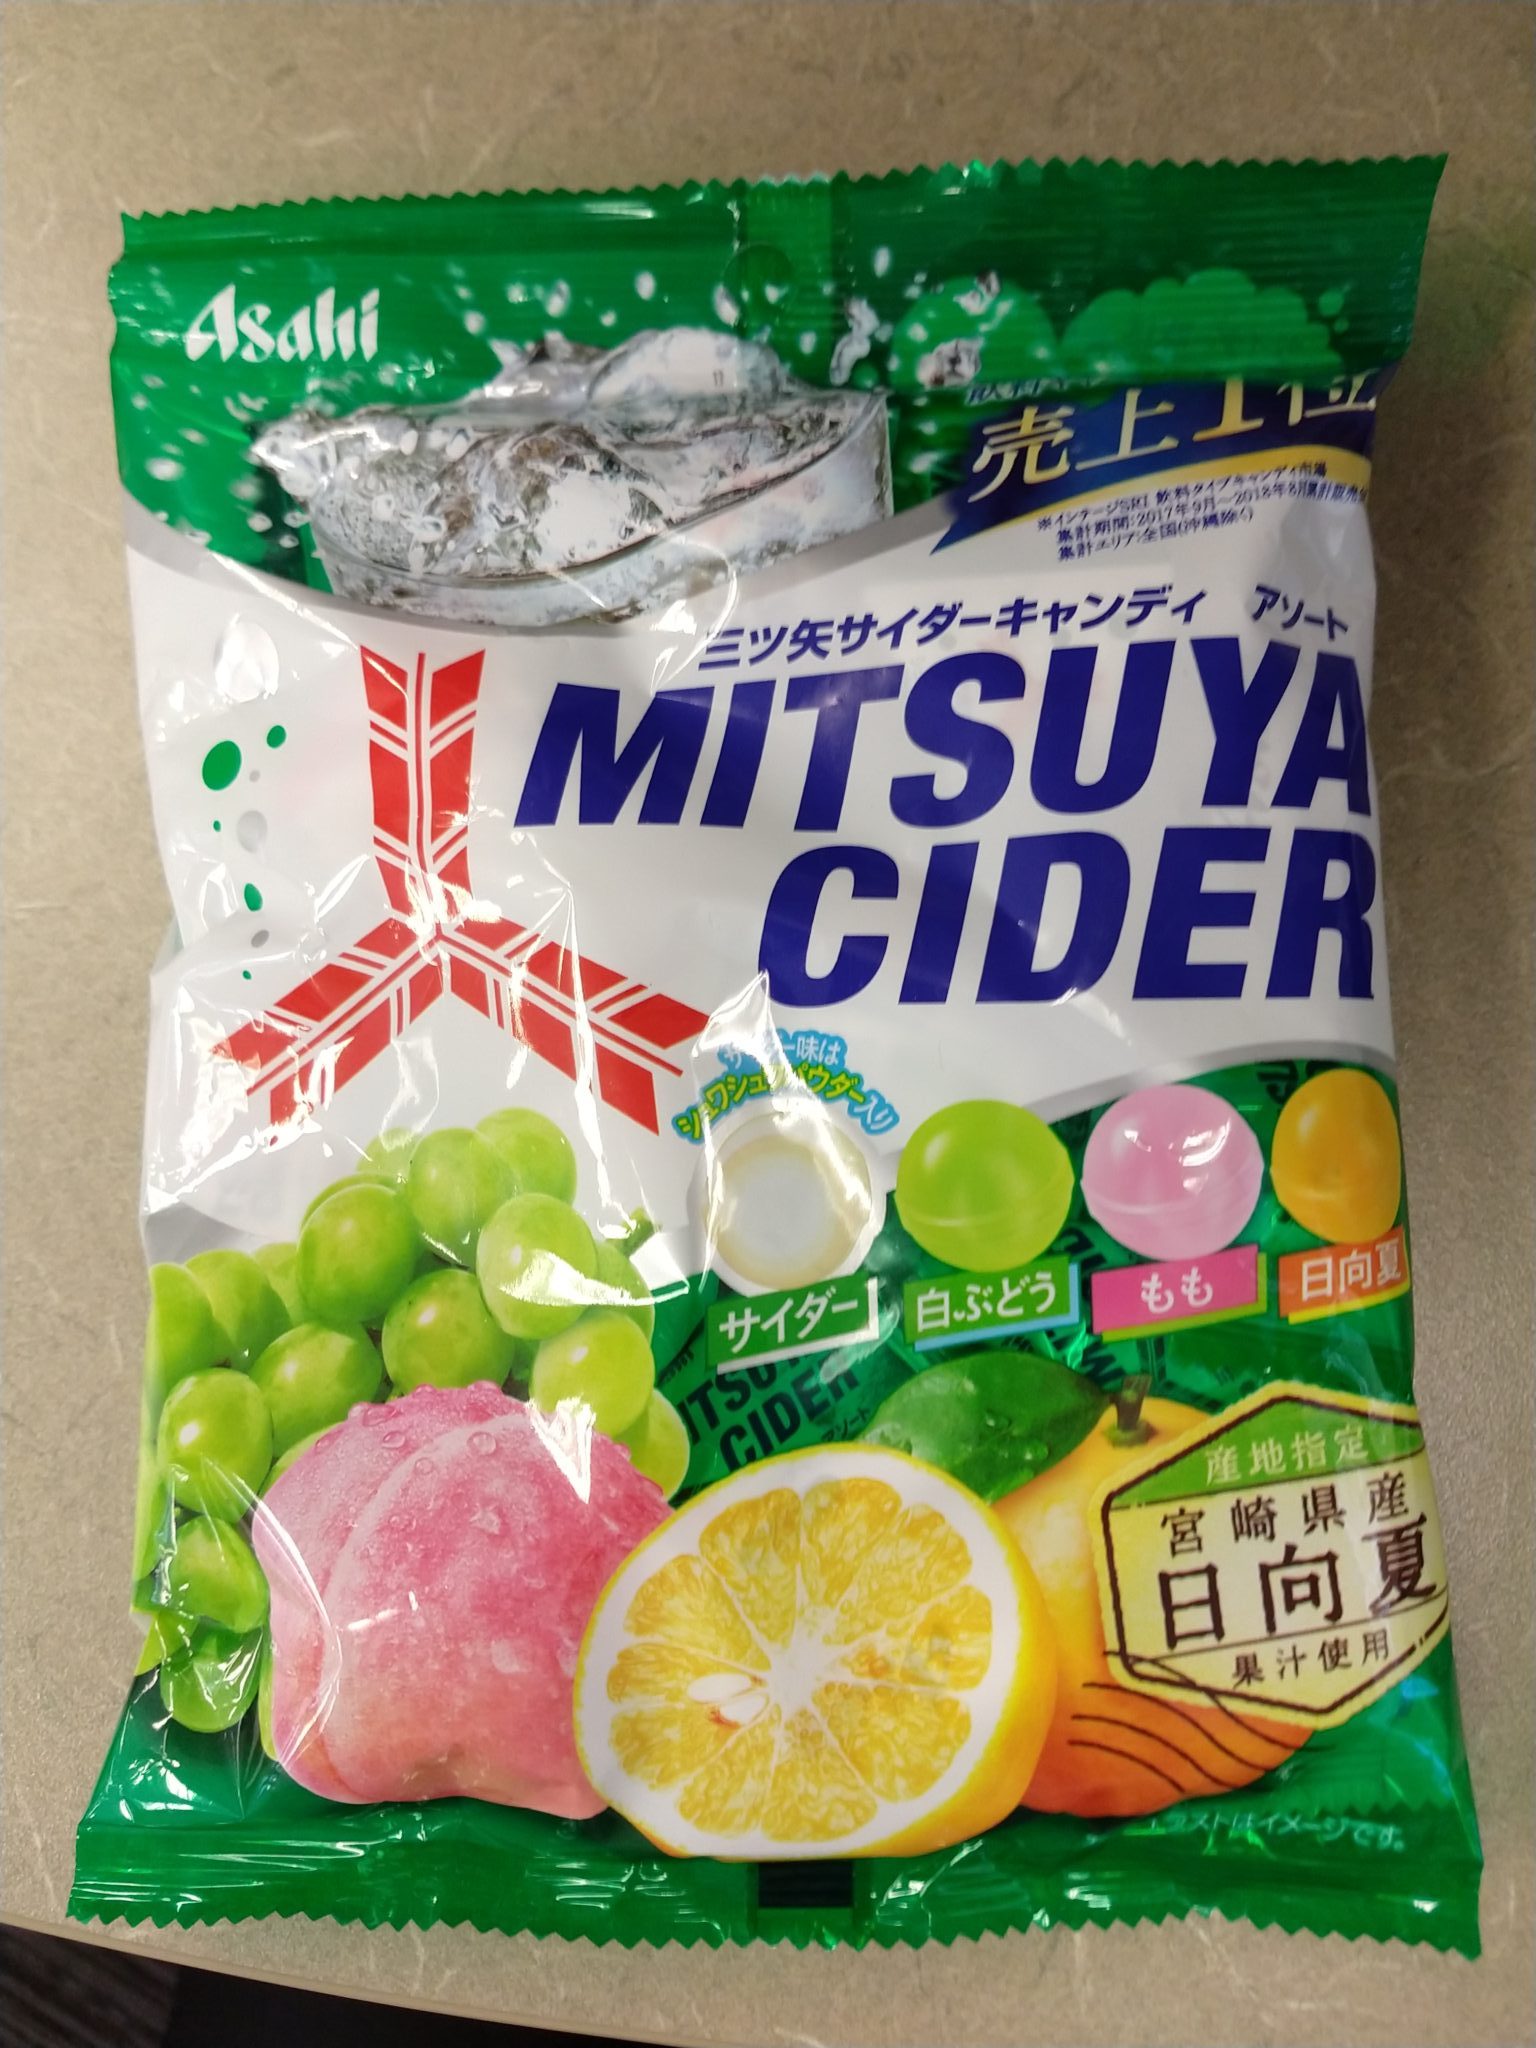 Mitsuya Cider Soda Hard Candy with Hyuganatsu